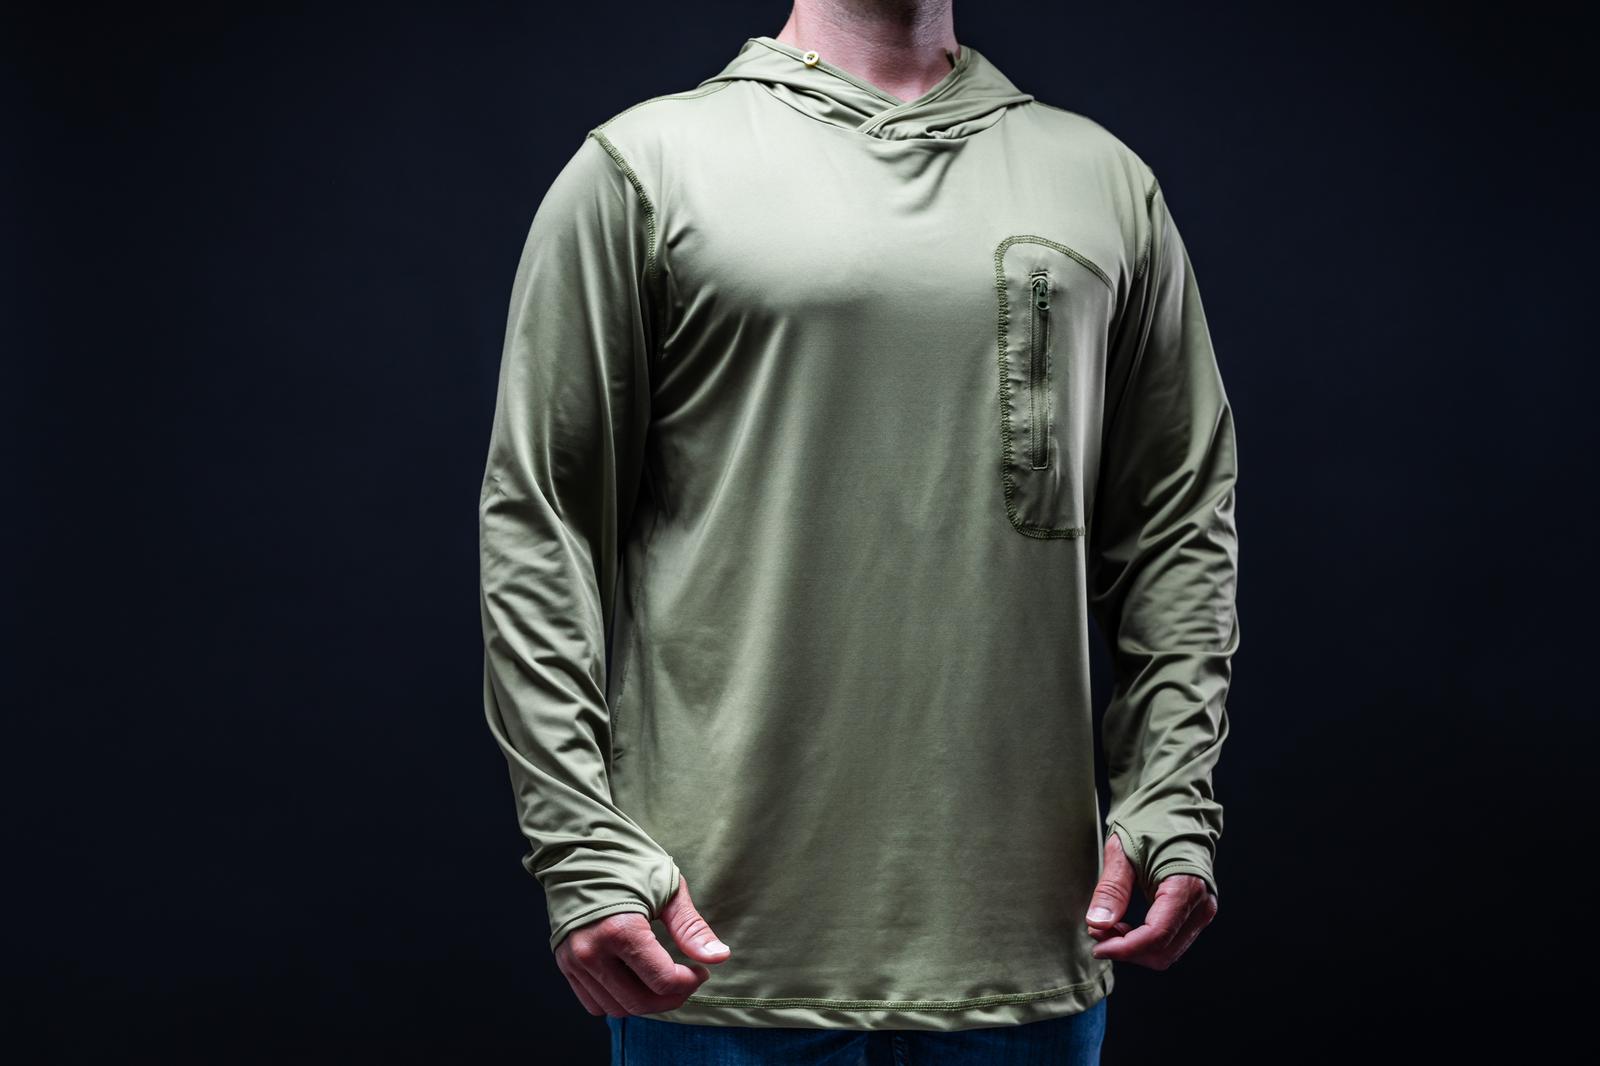 Little Donkey Andy Men's UPF 50+ UV Protection Long Sleeve Fishing Shirt, Pale Khaki / XS